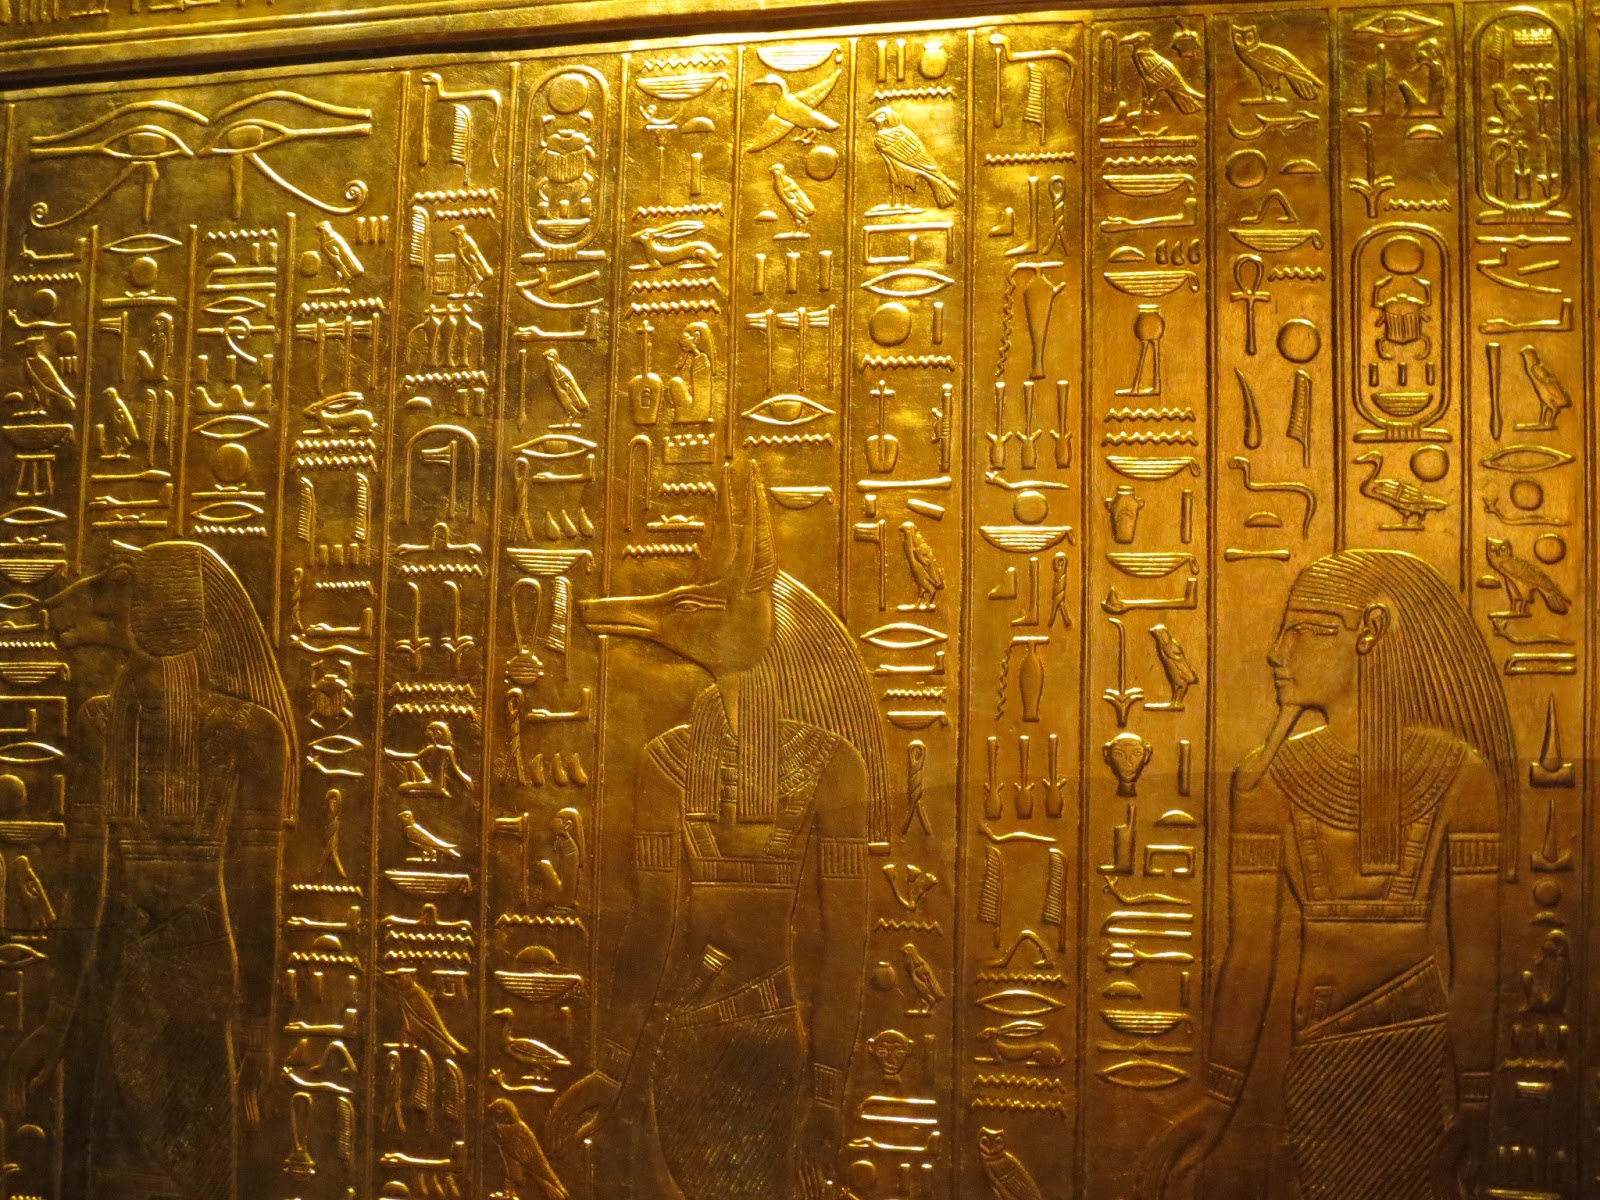 162-1623016_egyptian-hieroglyphics-picture-egyptian-gold-hieroglyphics..jpg